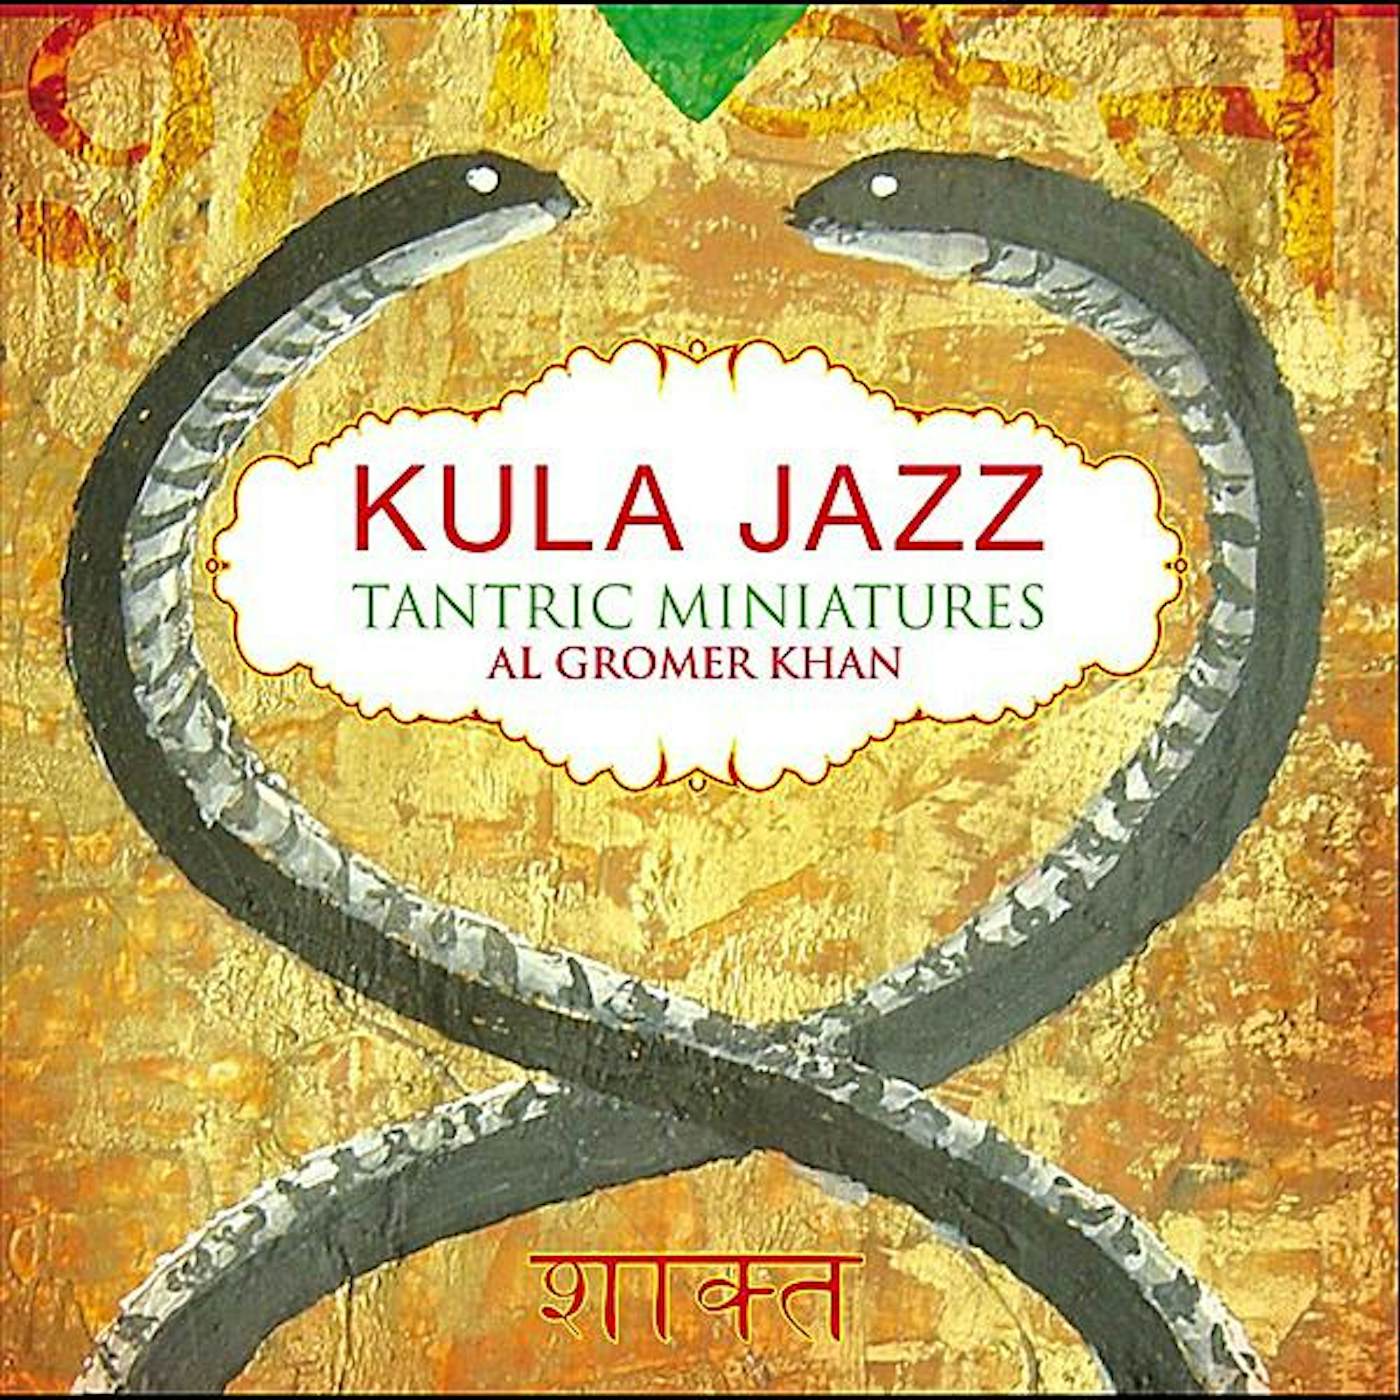 Al Gromer Khan KULA JAZZ TANTRIC MINIATURES CD